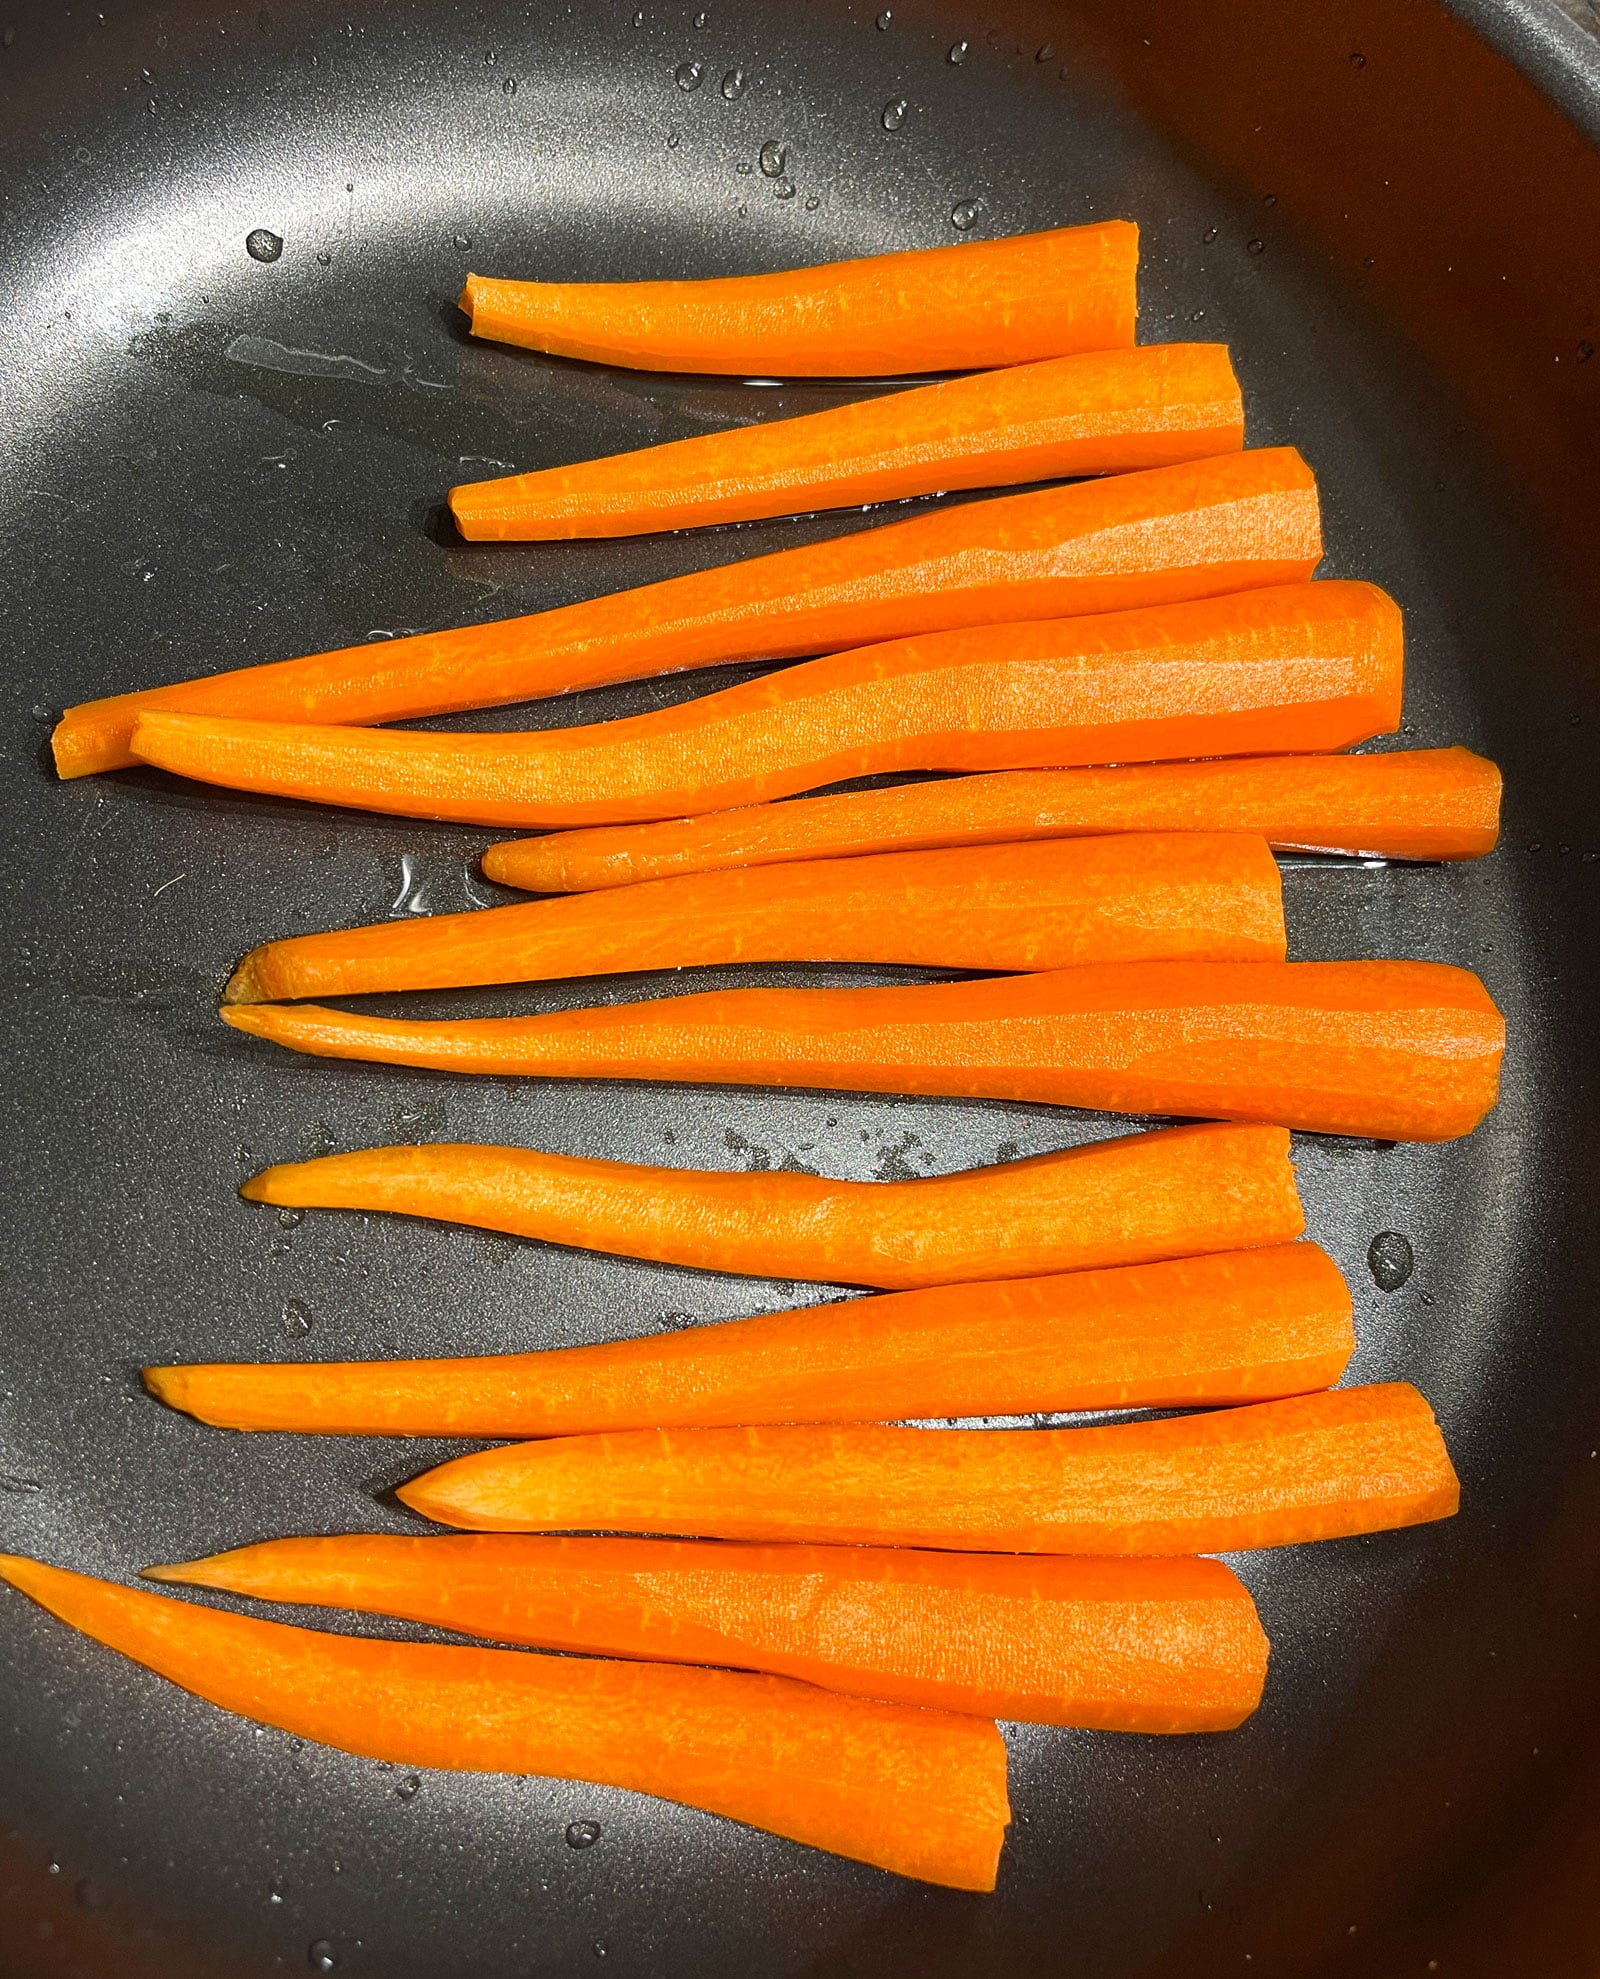 preparing carrots for roasting